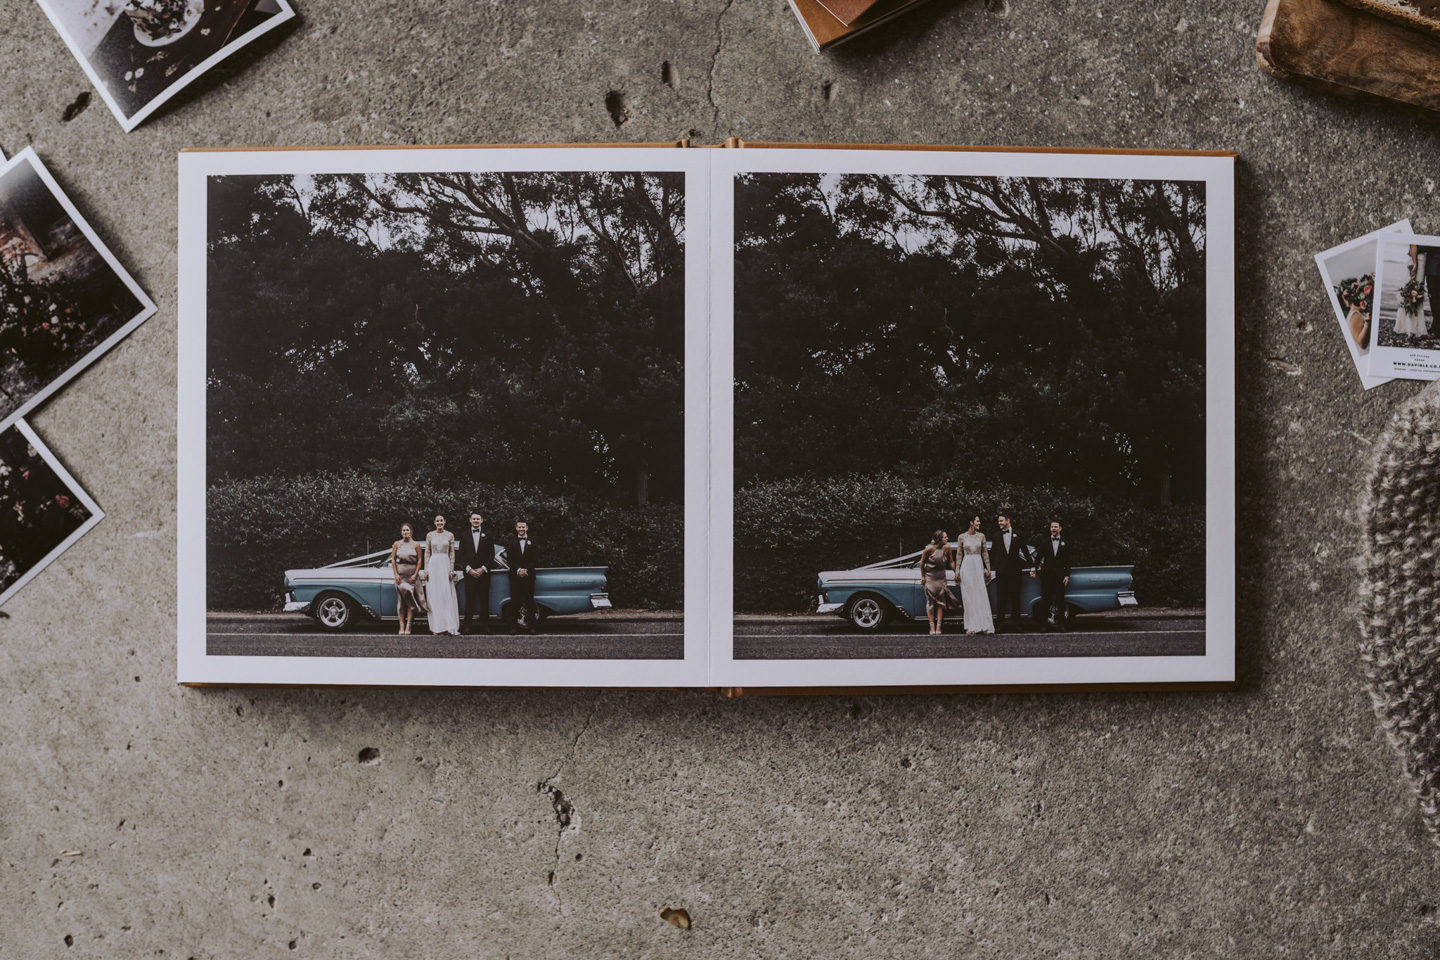 Album Template - 10x10 Flush-Mount Wedding Photo Album for Pro